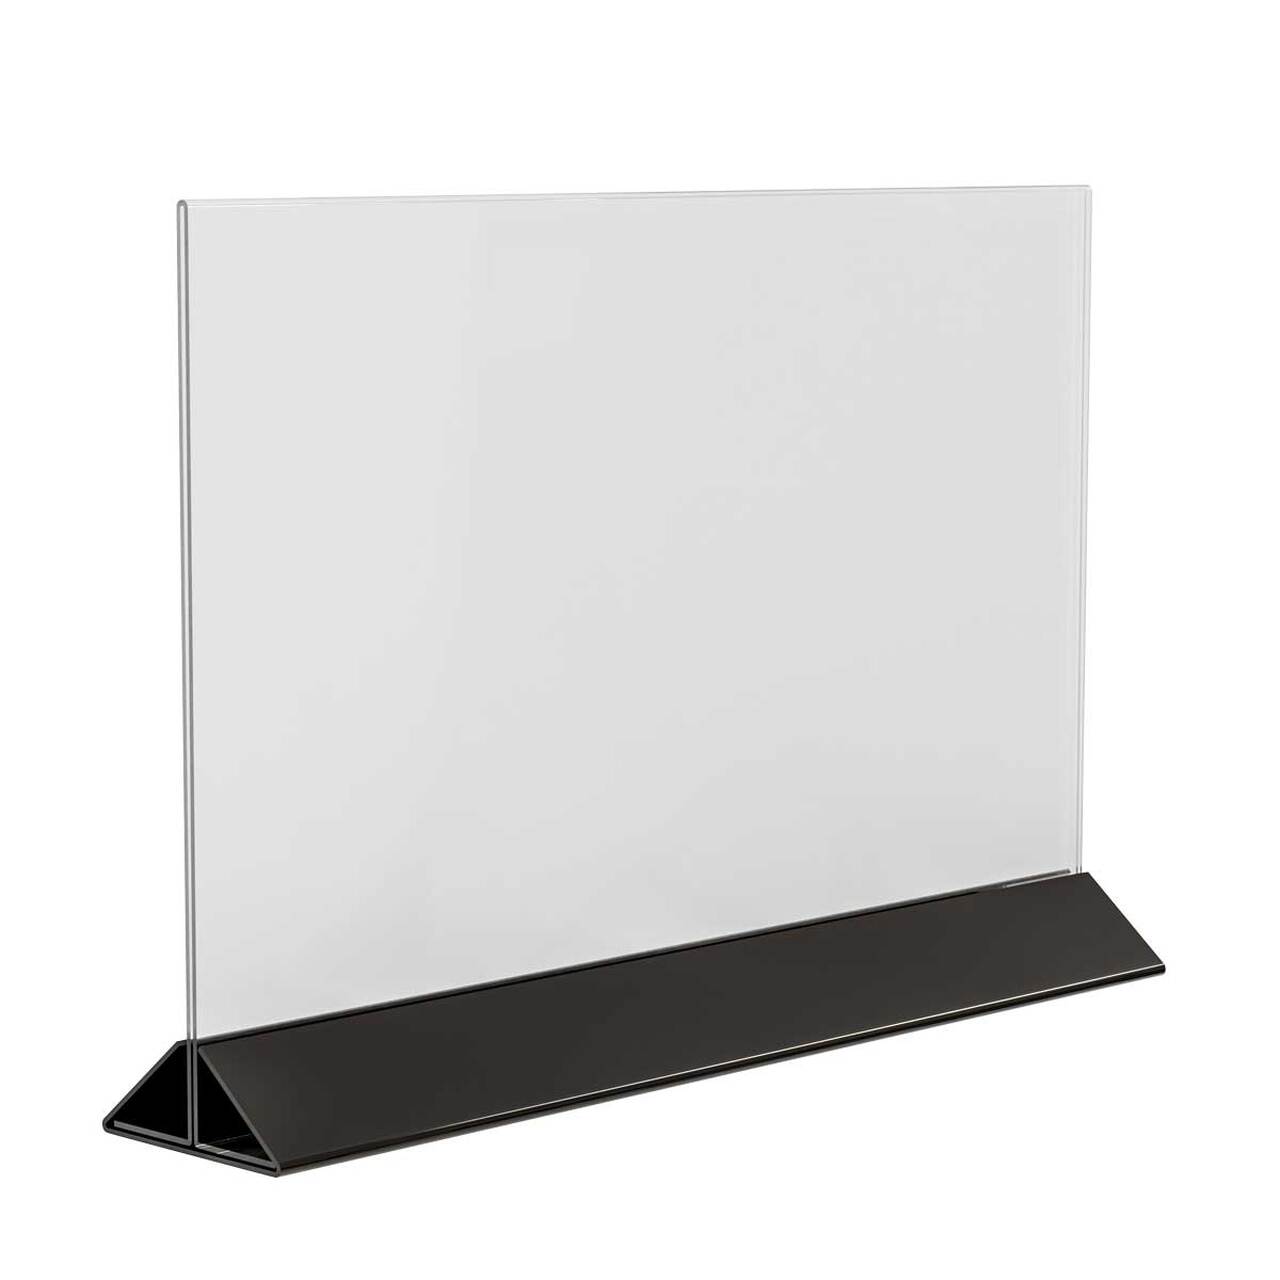 Suport meniu tip T, transparent, cu bază din plexiglas negru, A5(148x210mm), Landscape